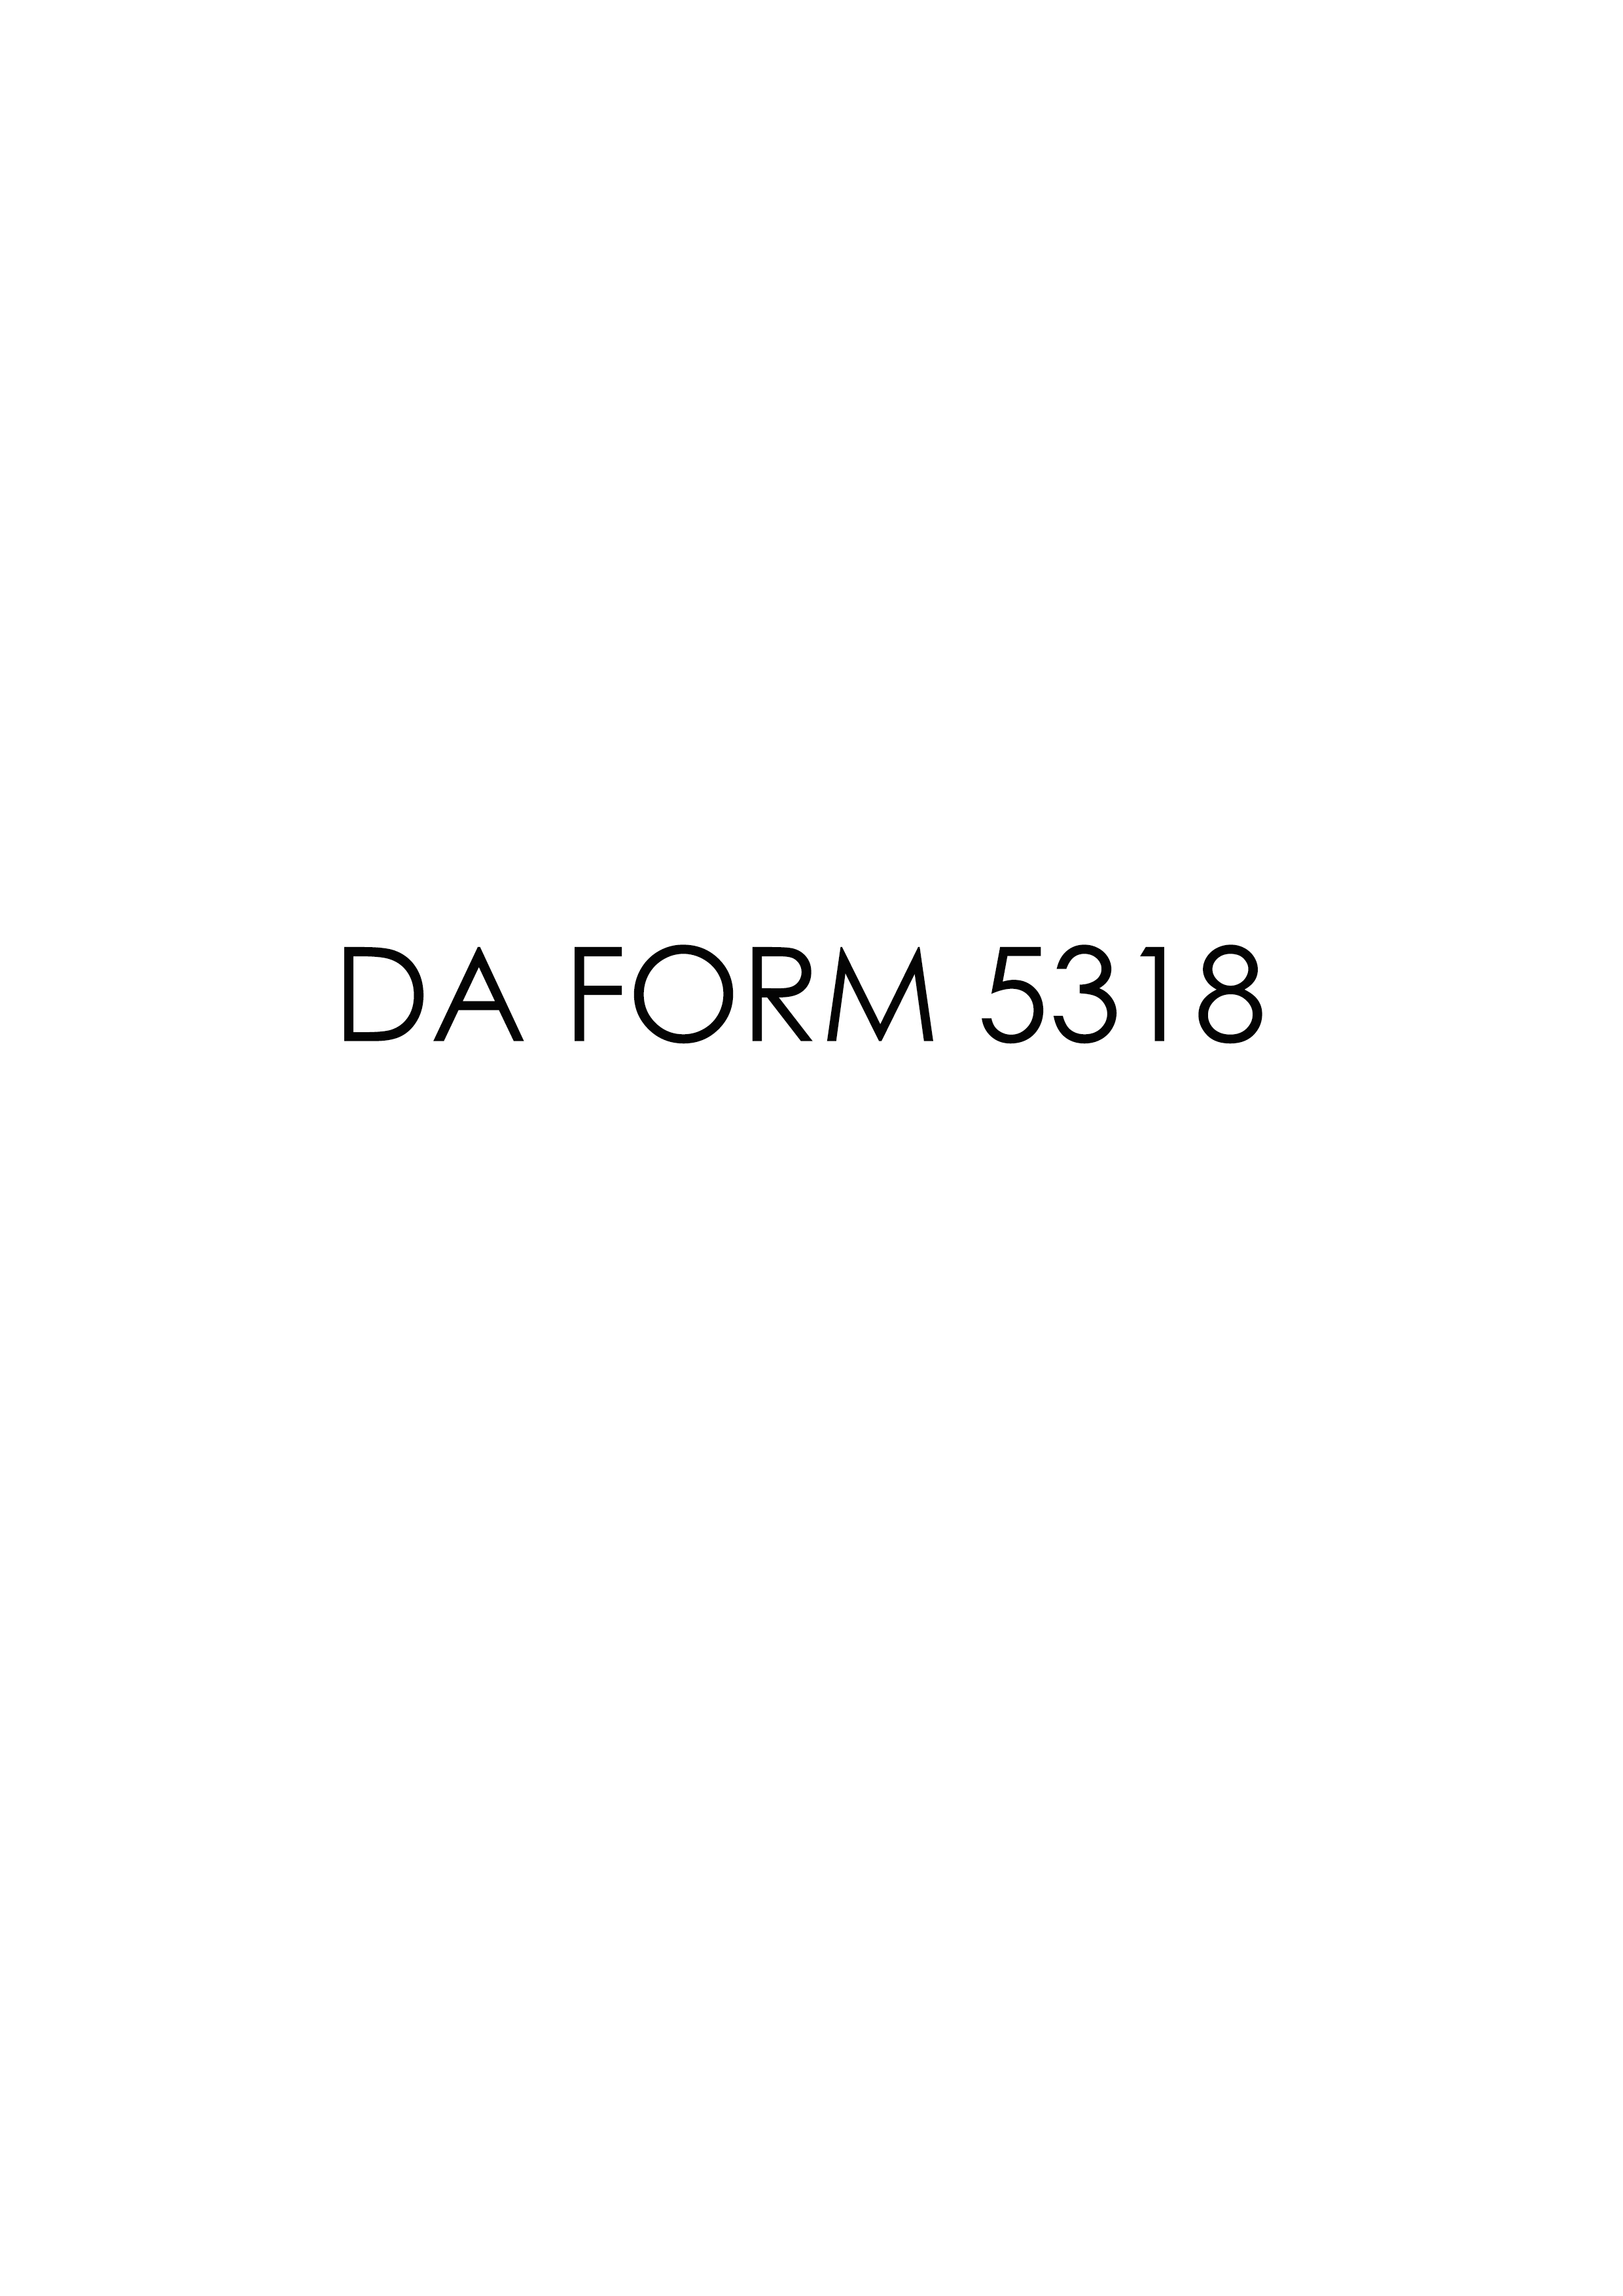 da Form 5318 fillable